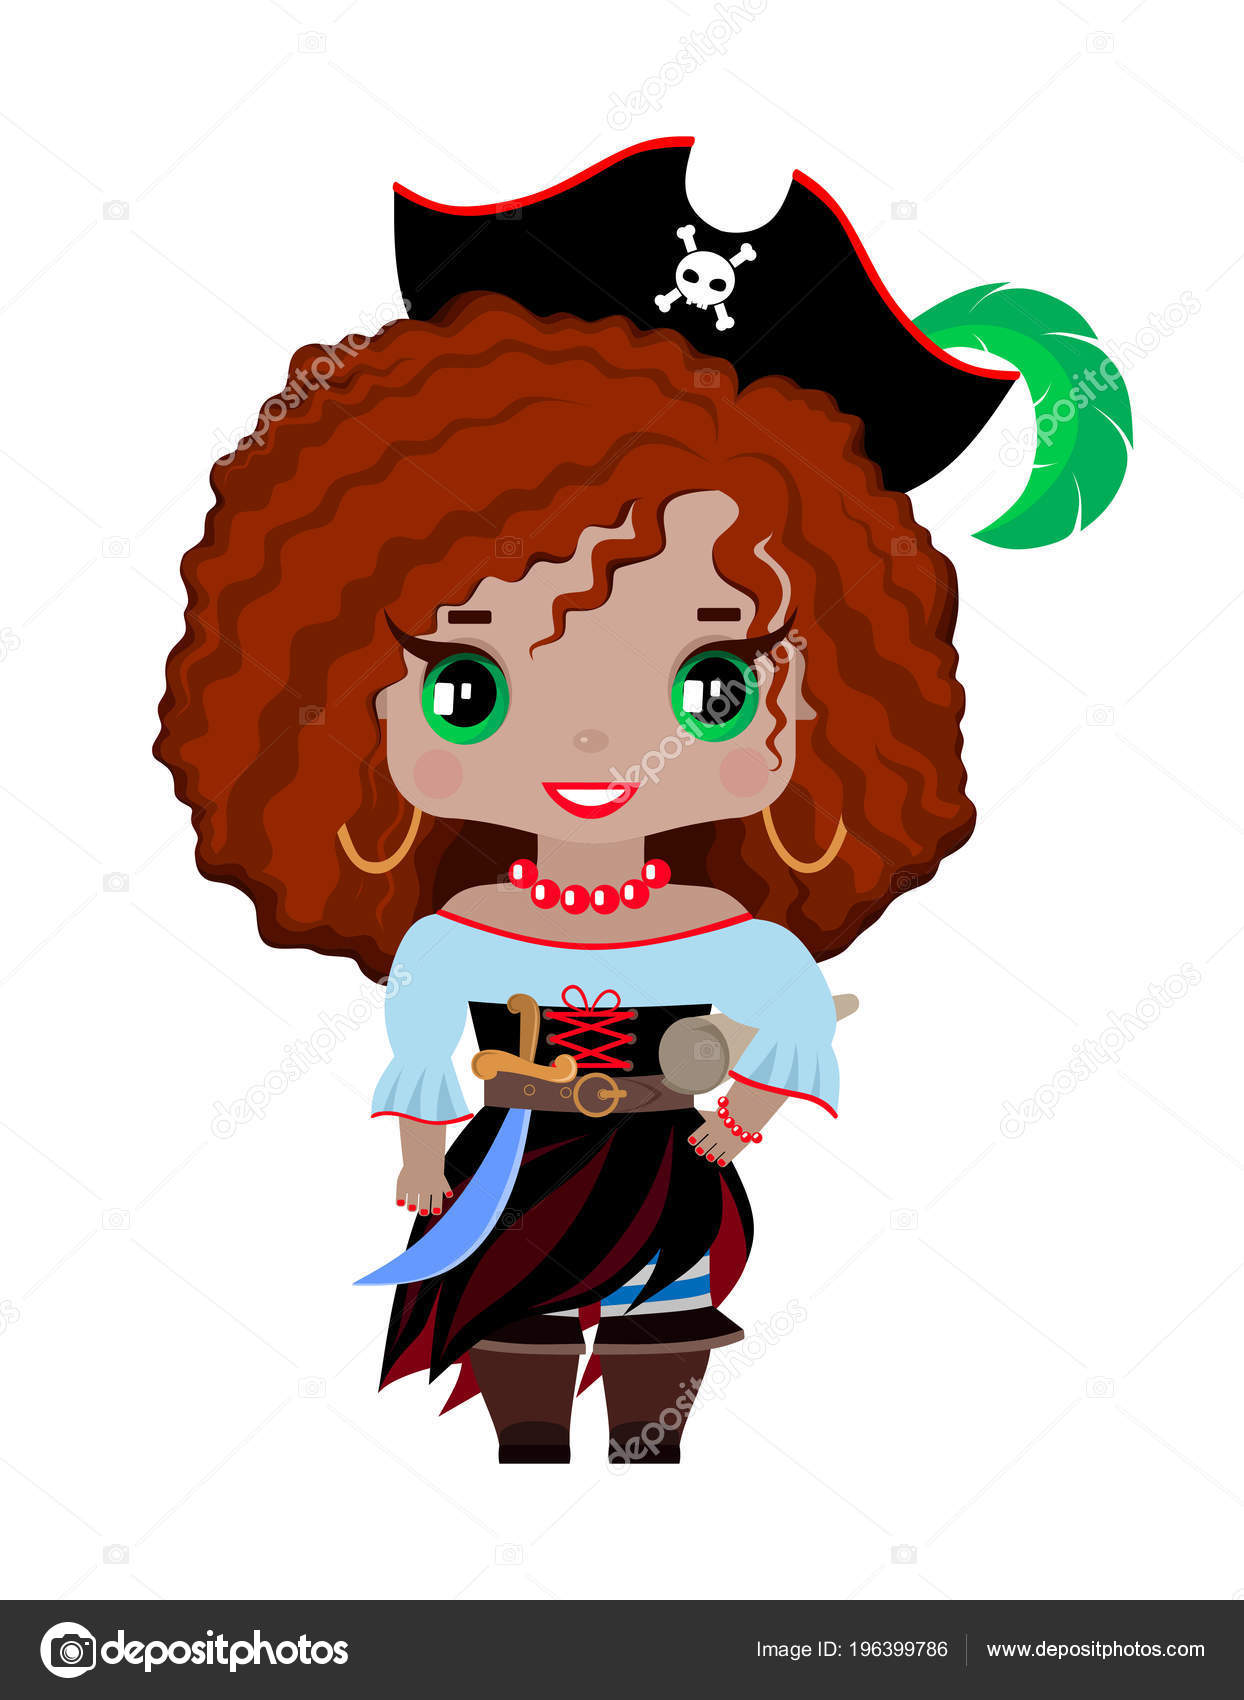 depositphotos_196399786-stock-illustration-little-pirate-girl-hat-feather.jpg